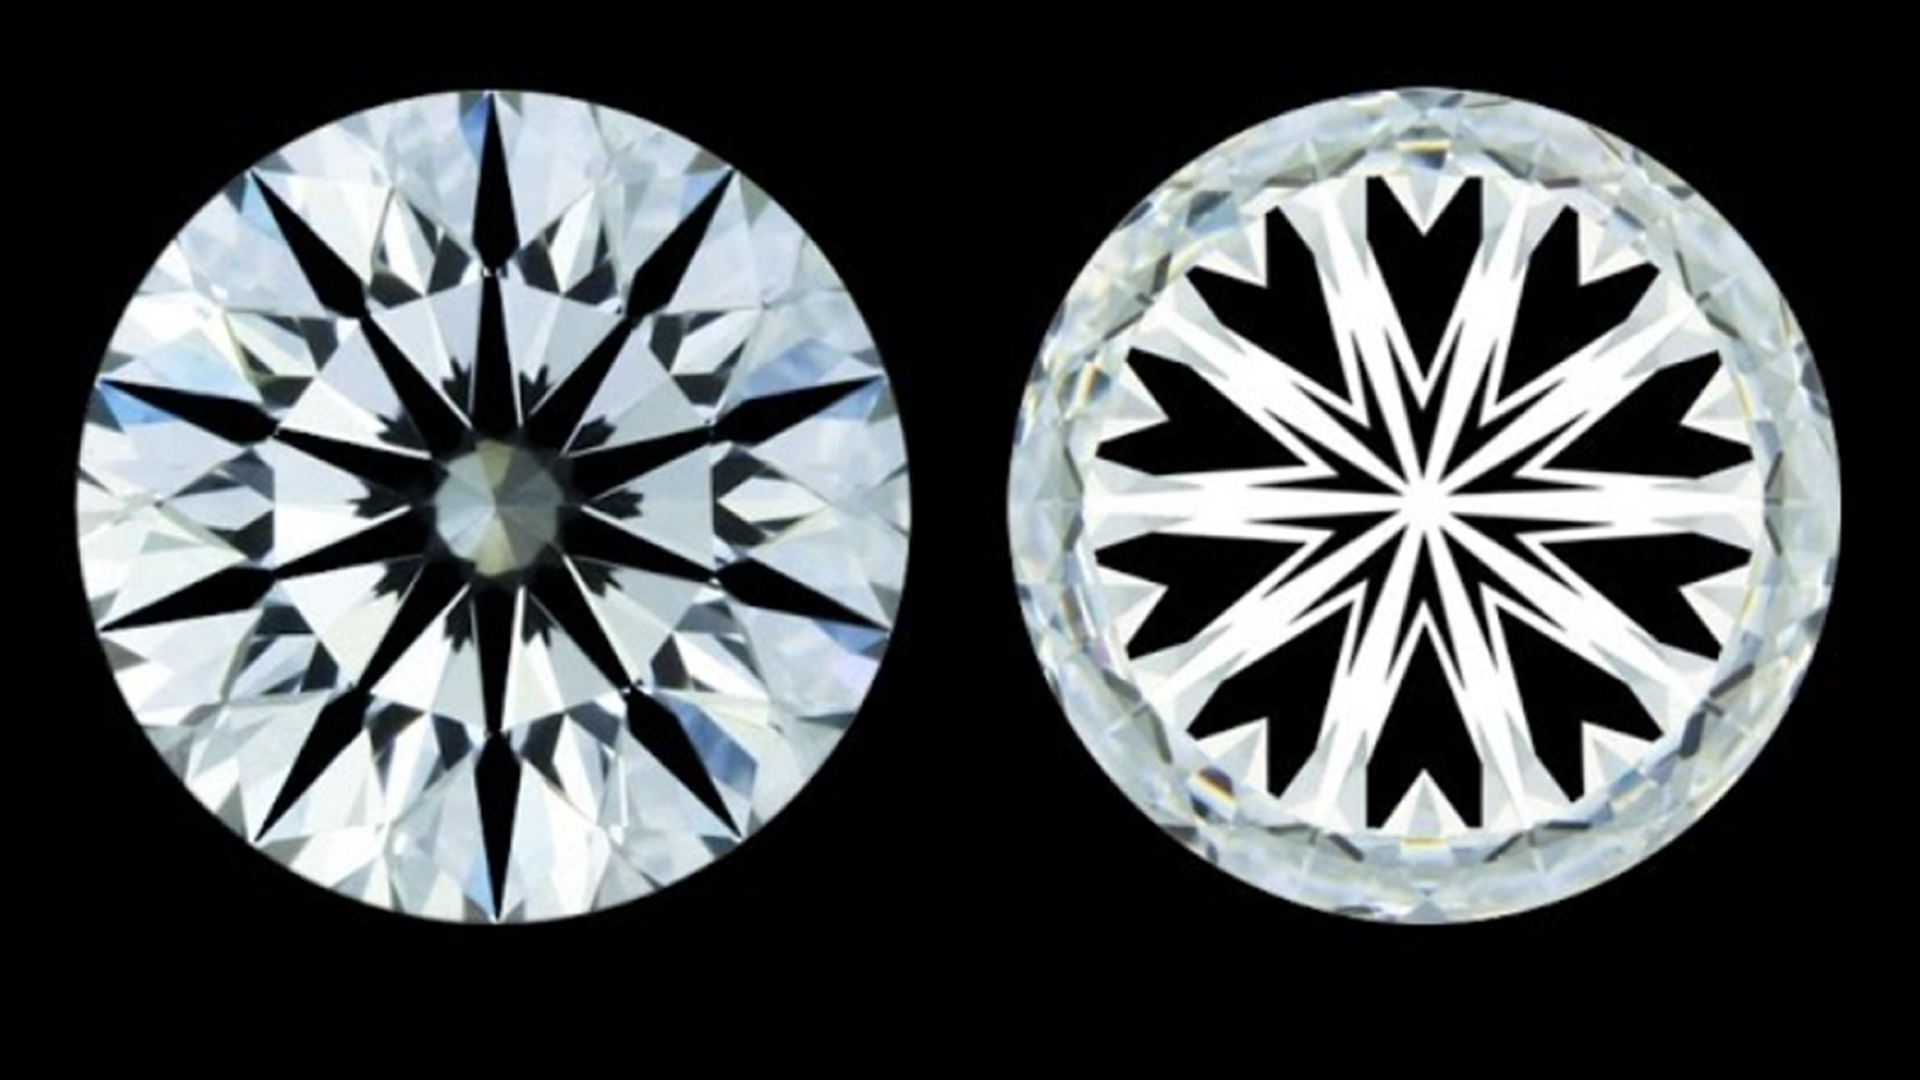 JannPaul: Comparing a Common Round Diamond with Signature Super Ideal and Solasfera